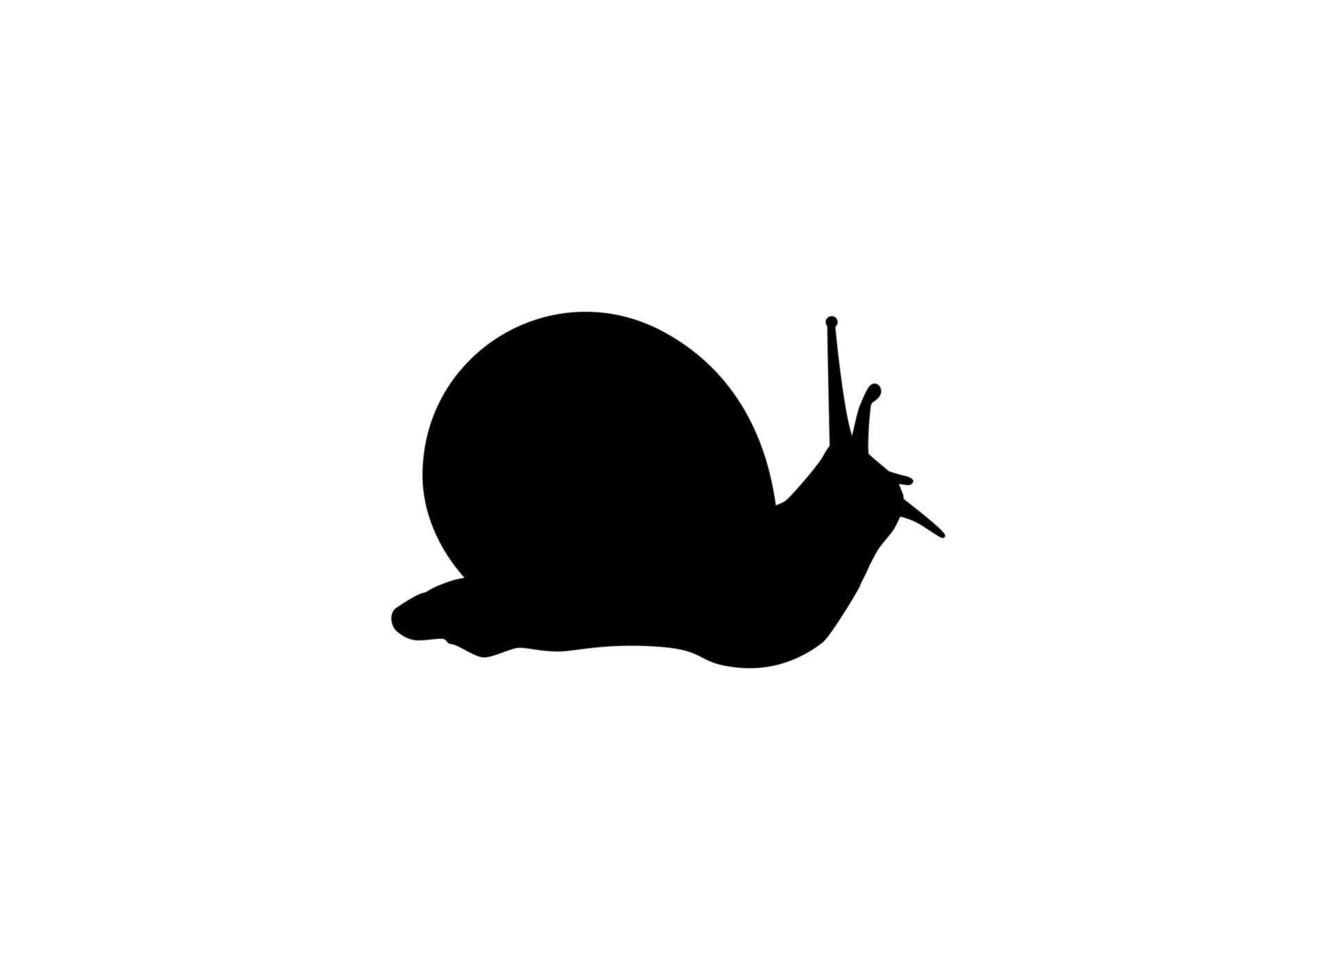 Snails are also called Escargot Silhouette for Logo, Art Illustration, Apps, Website or Graphic Design Element. Vector Illustration